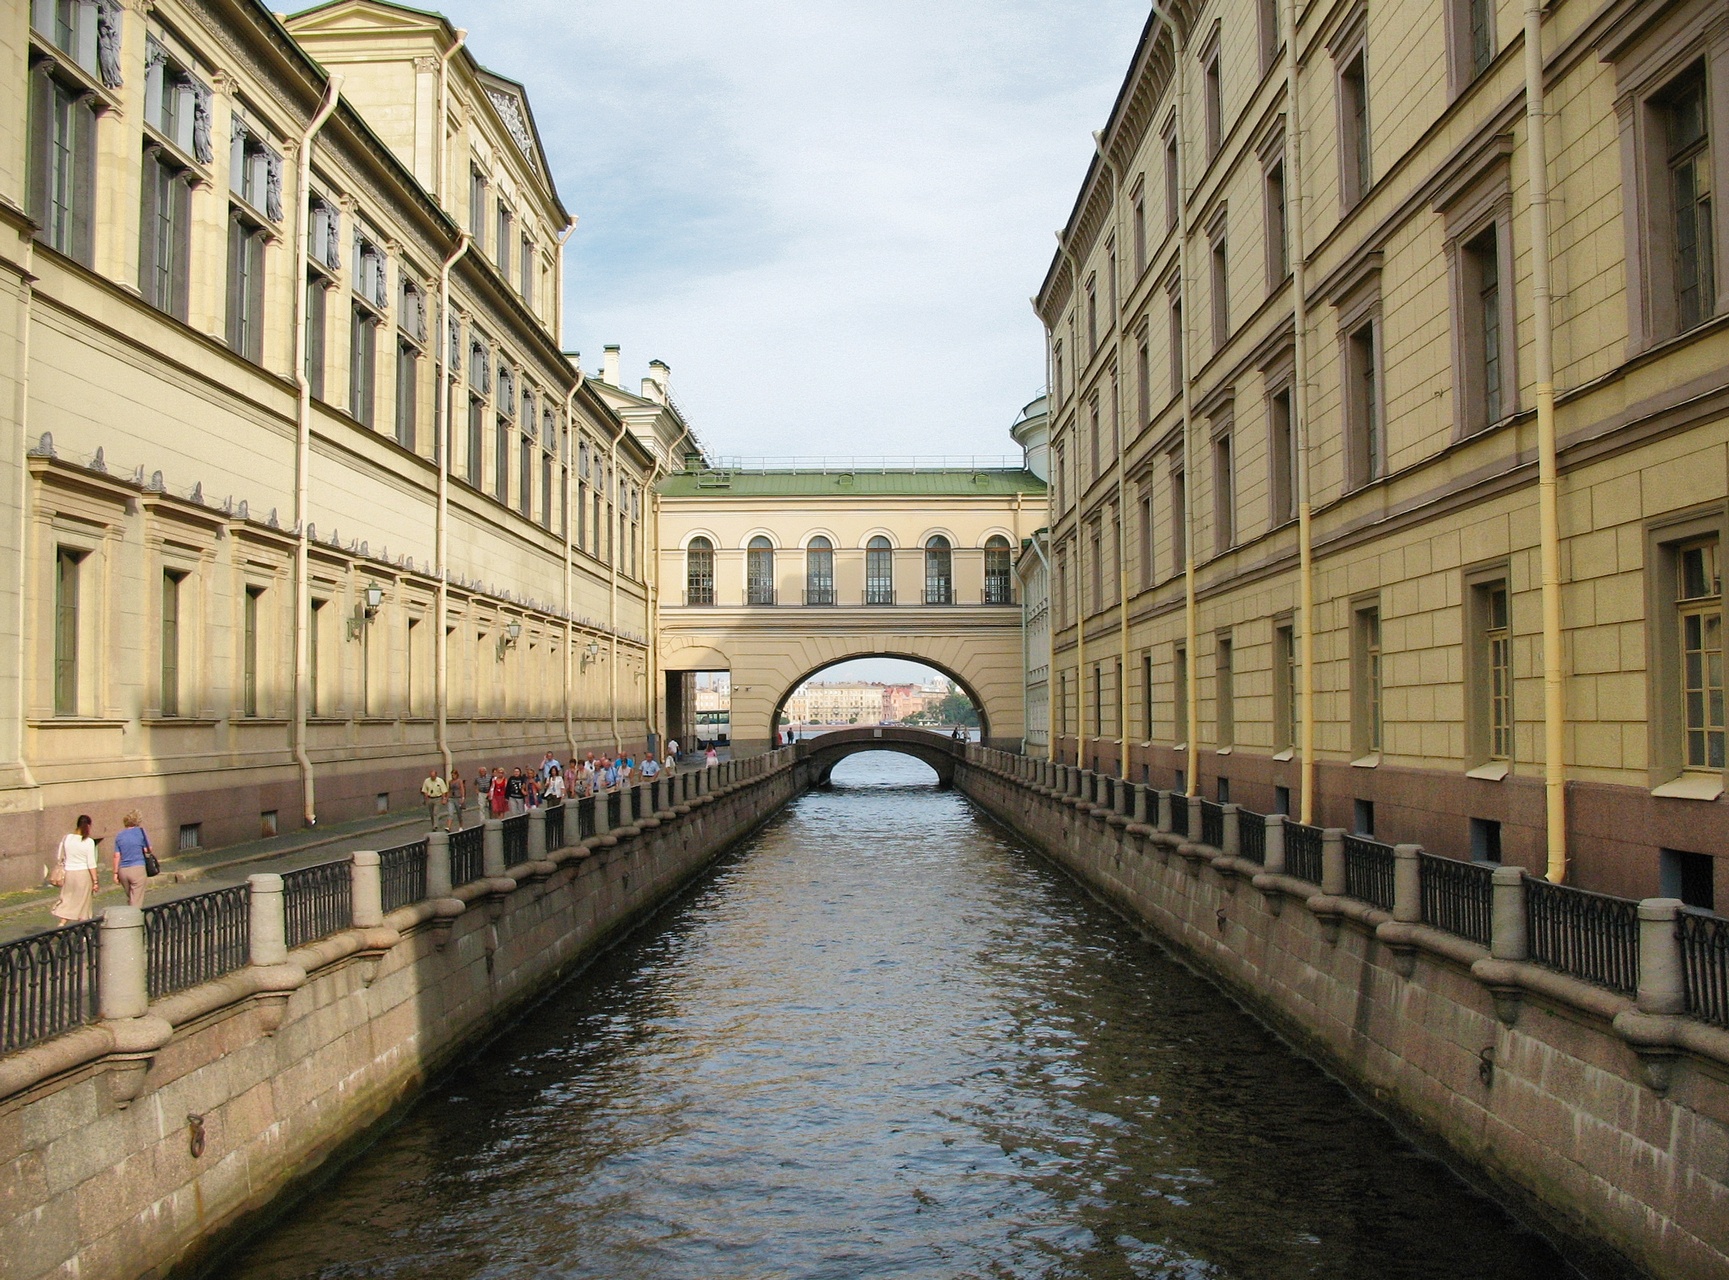 File:Saint Petersburg Winter Canal IMG 5798 1280.jpg - Wikimedia Commons